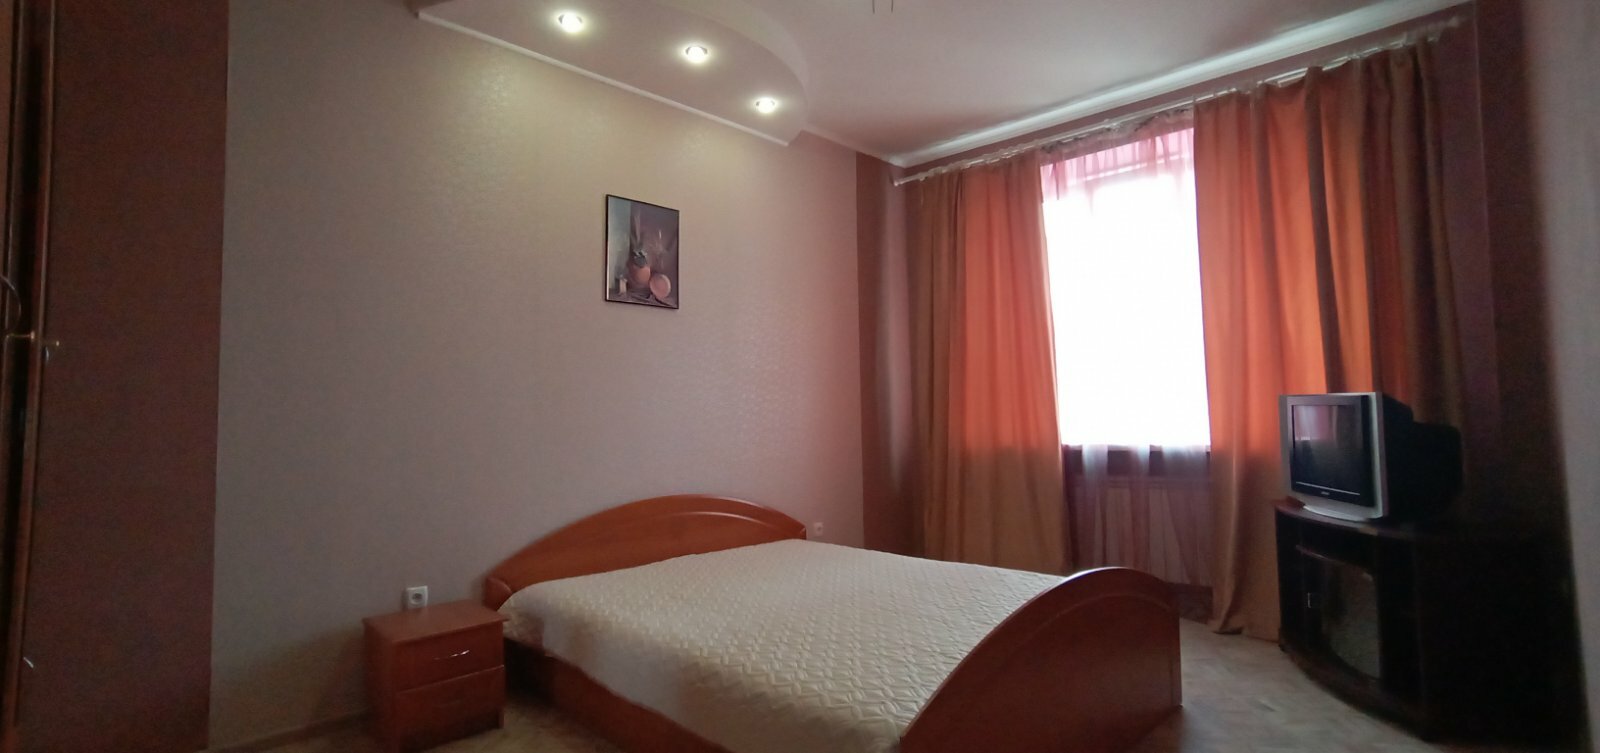 3-кімнатна квартира подобово 85 м², Сумська вул., 73